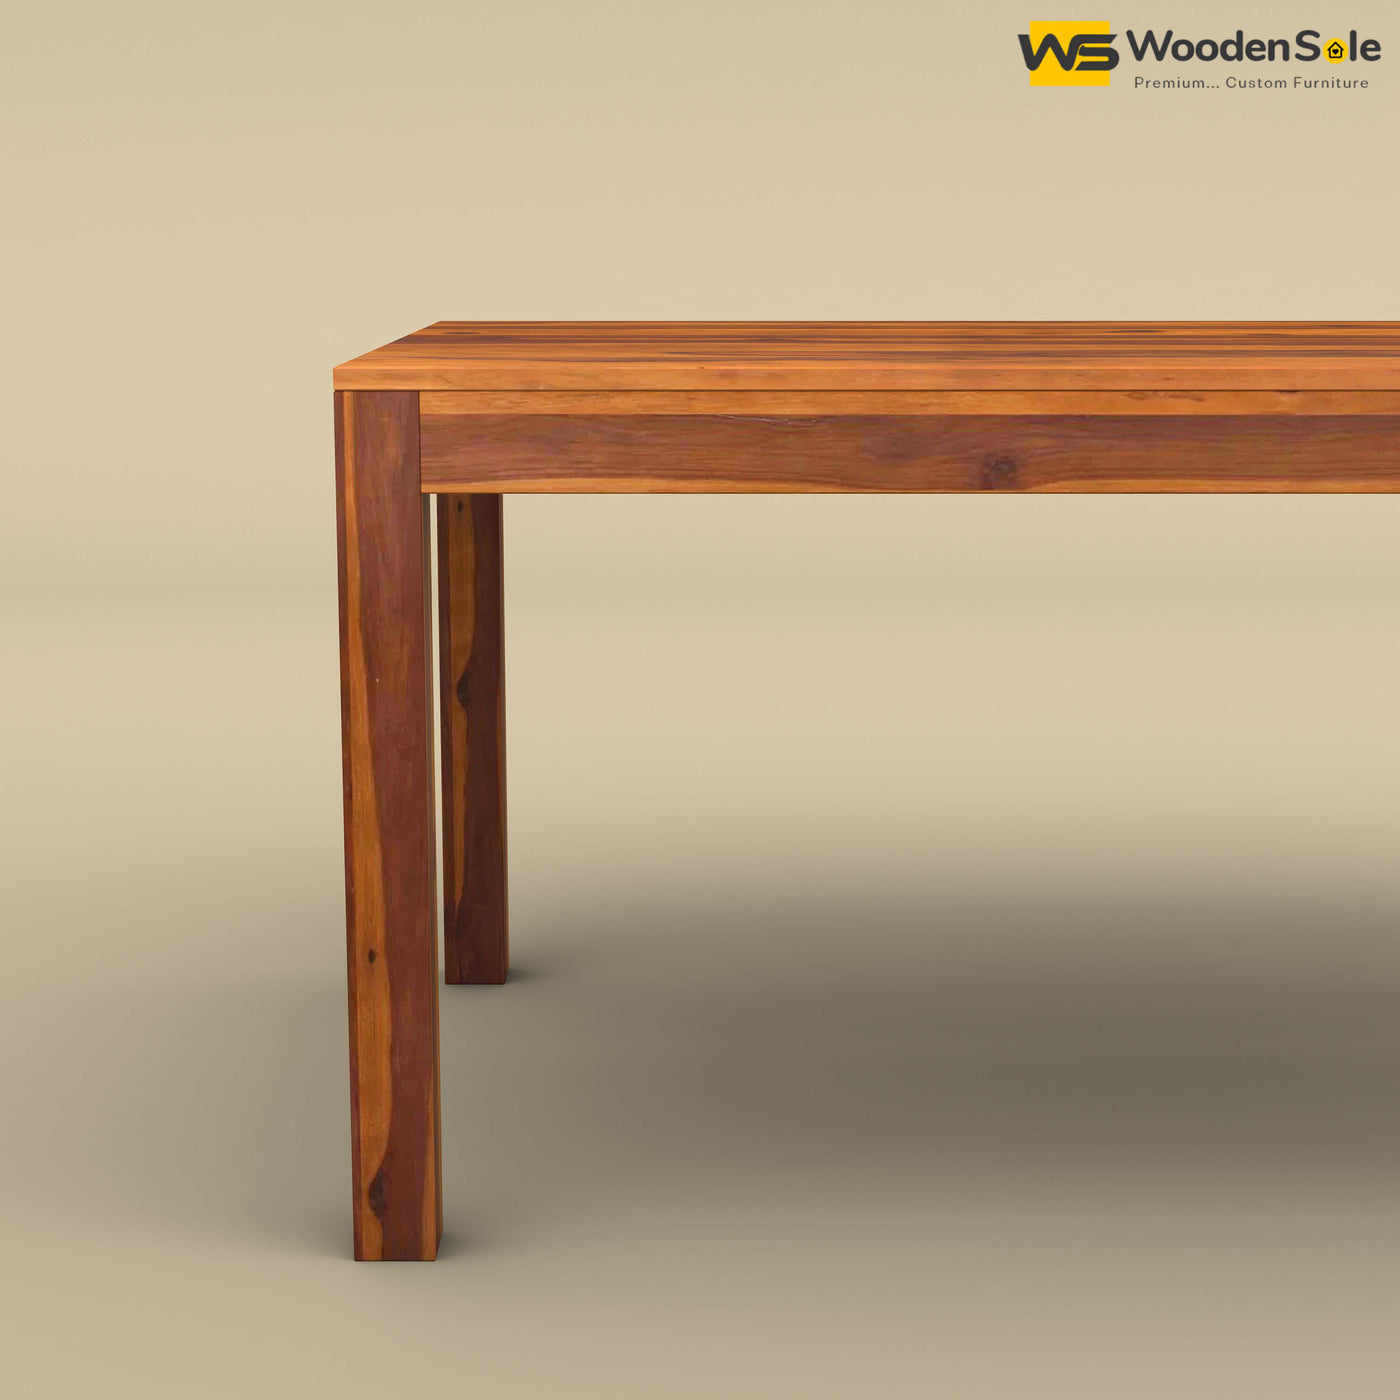 Sheesham Wood 6 Seater Dining Table Set with Bench (Honey Finish)